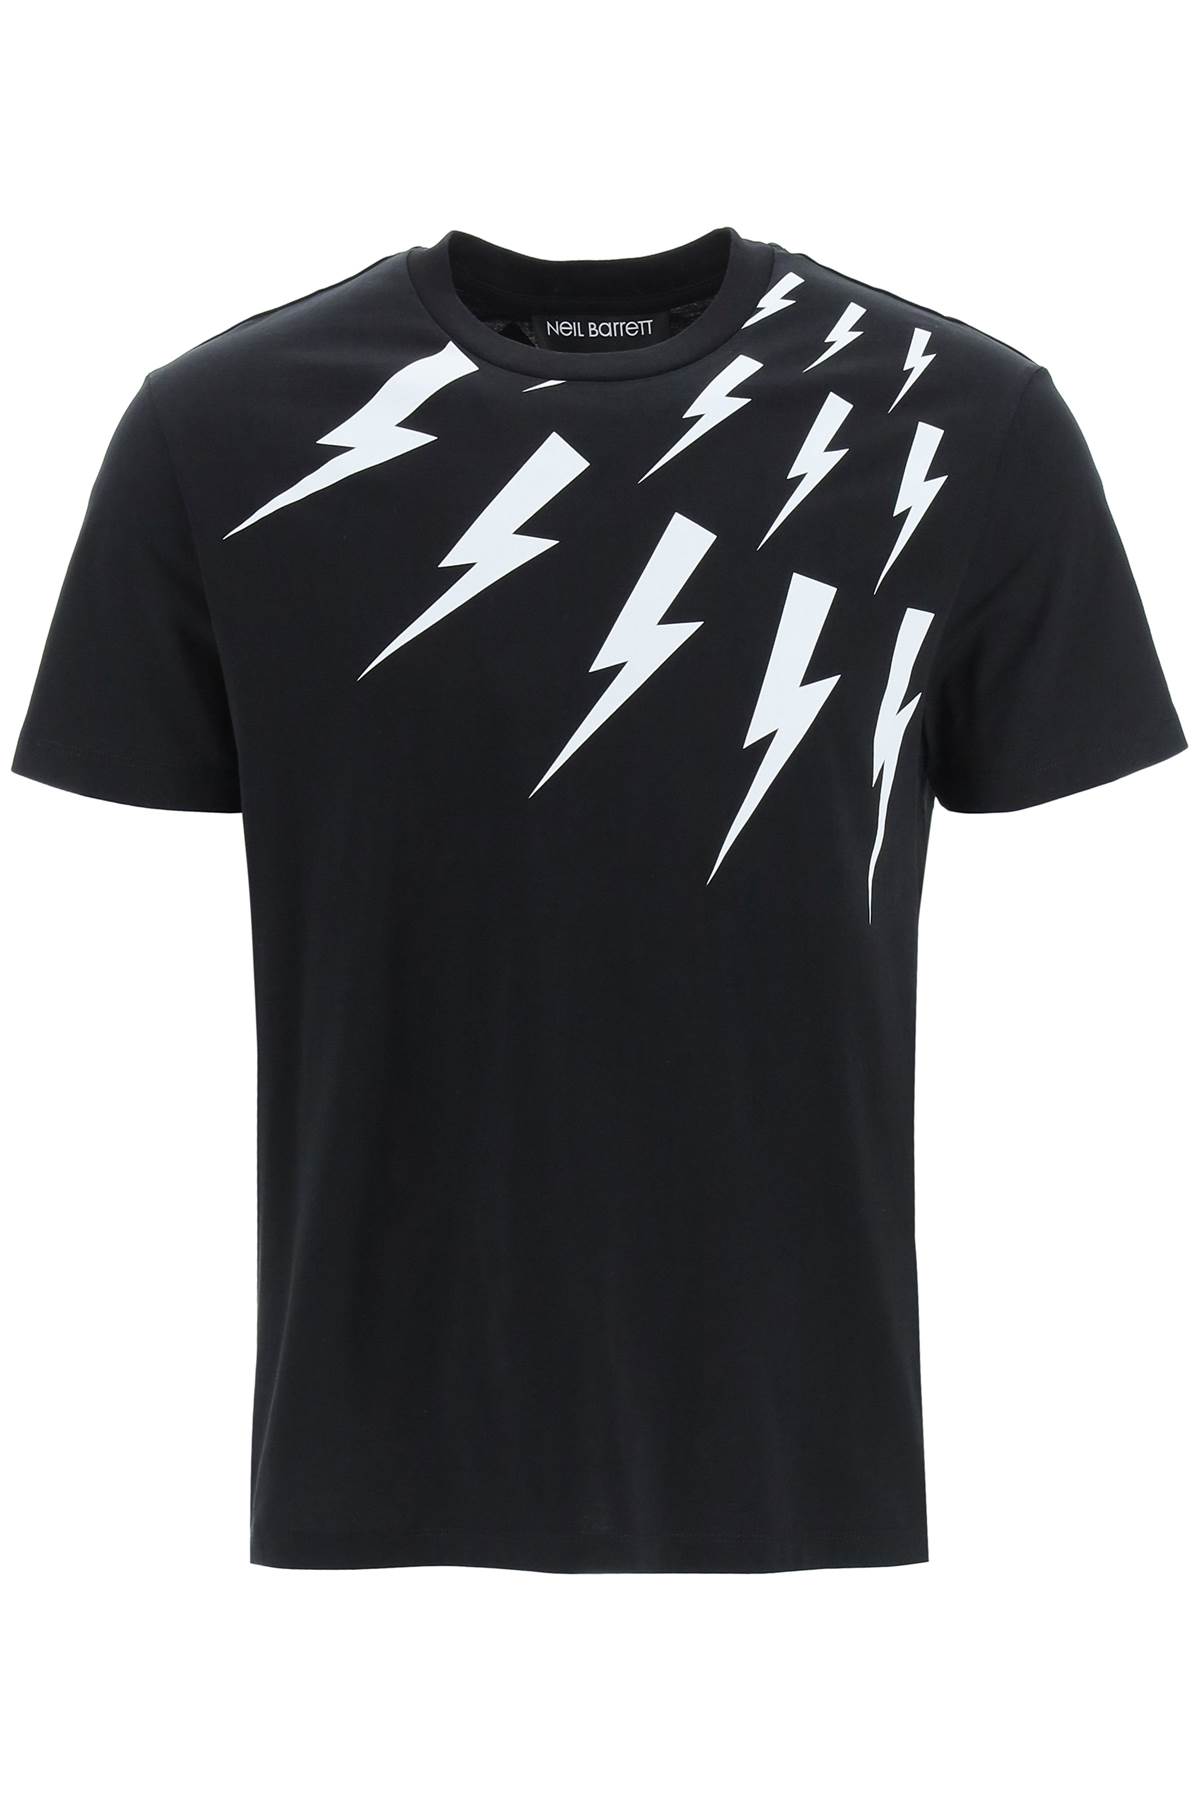 Neil Barrett Off-set Fair-isle Thunderbolt T-shirt